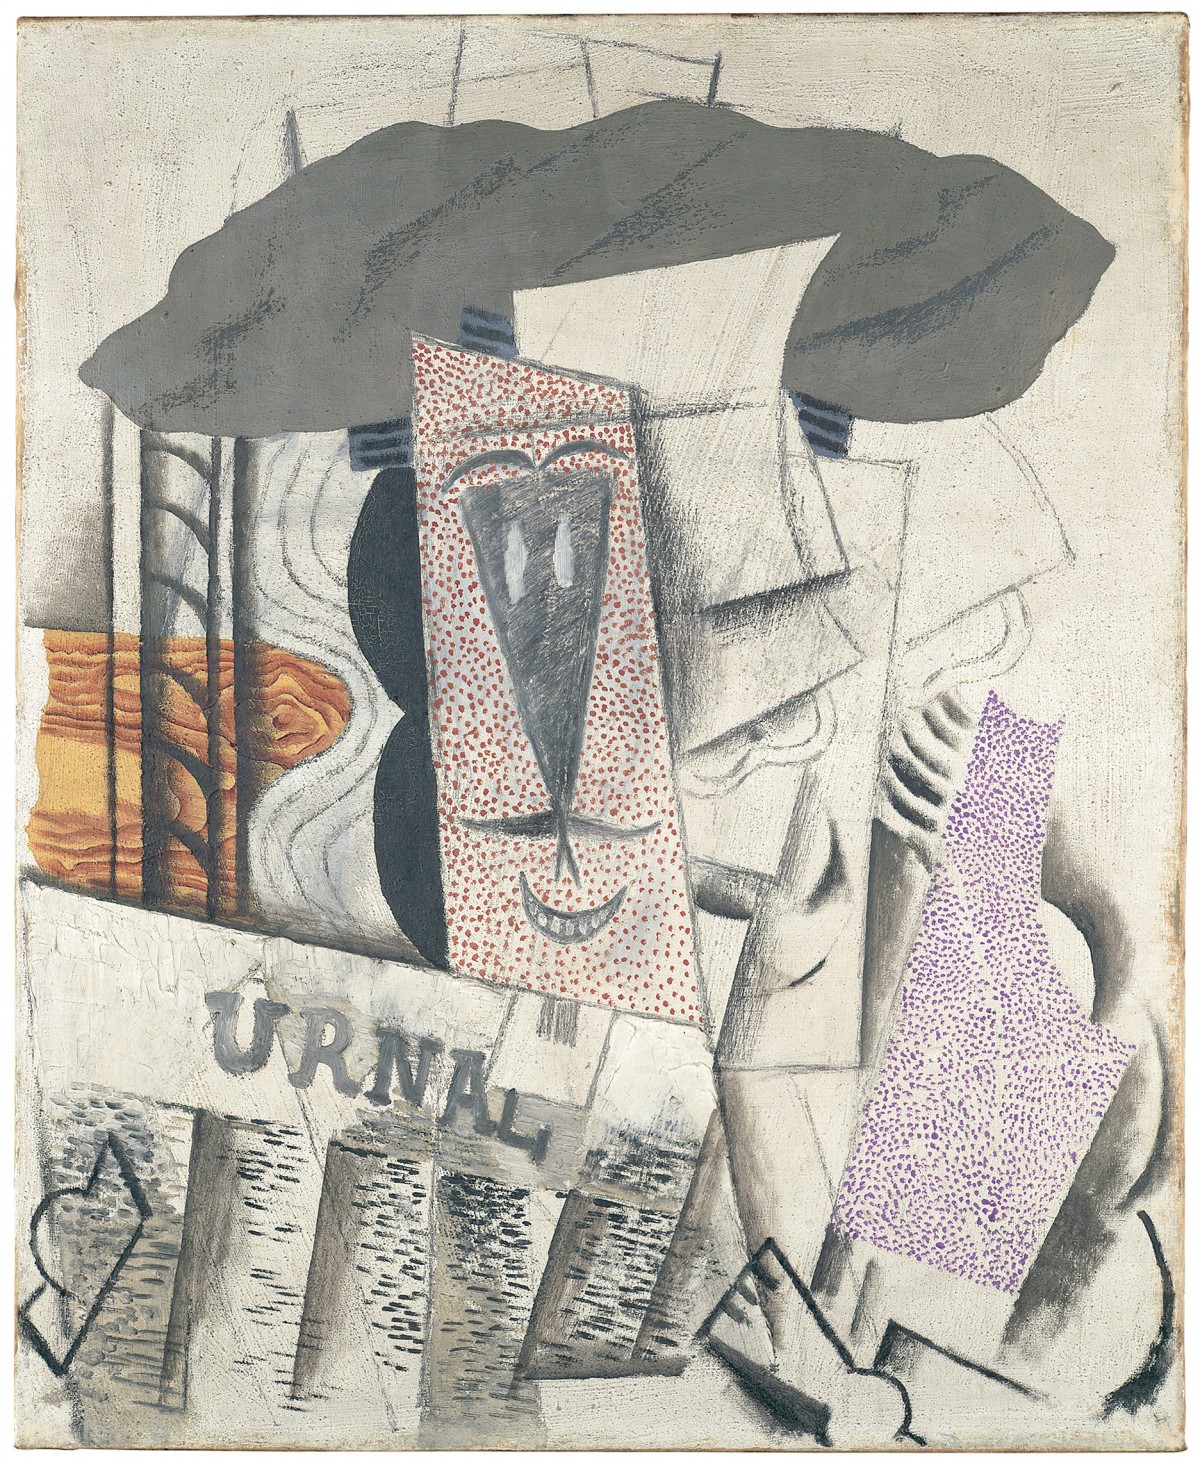 Image: Pablo Picasso, Student with Newspaper(L’etudiant au journal), 1913–14